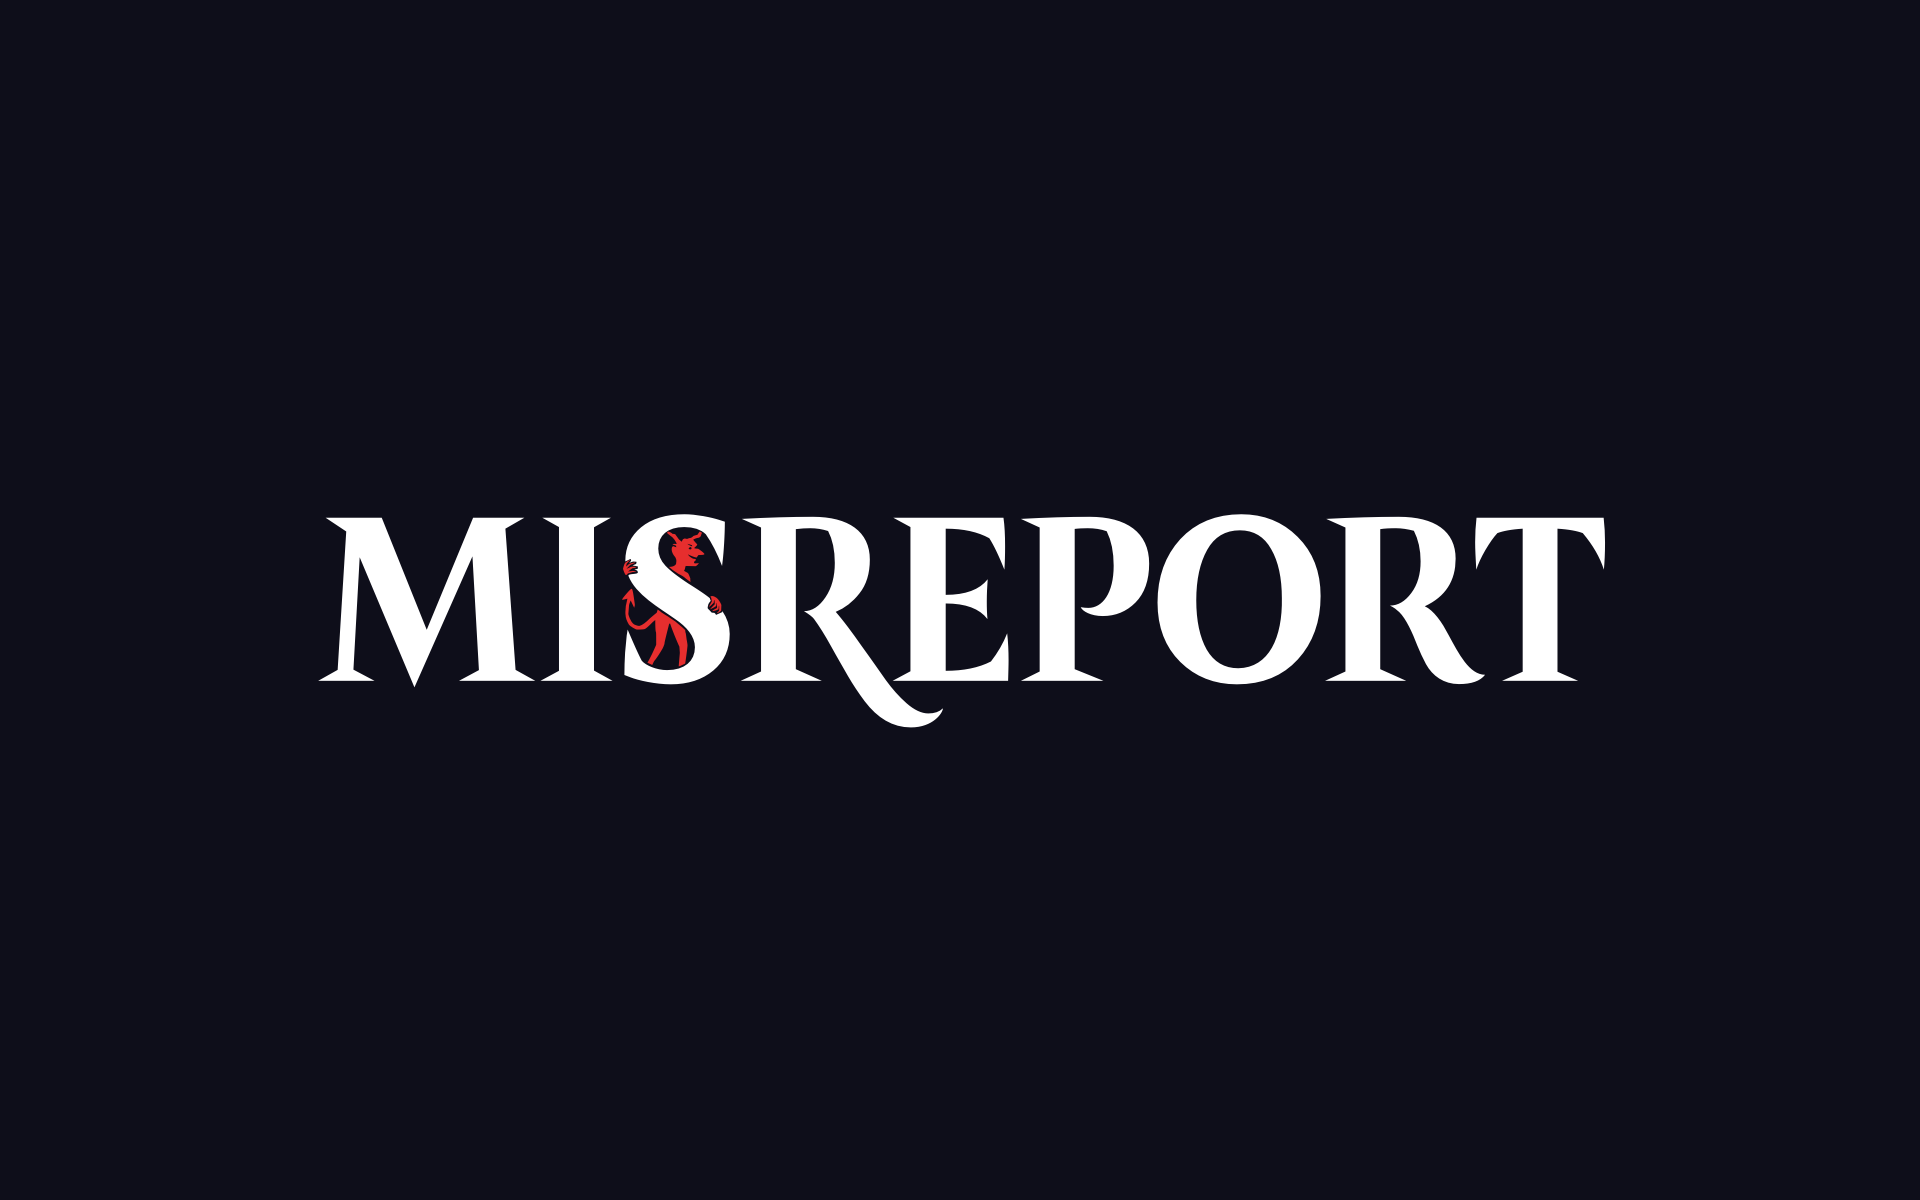 Misreport logo reverse.png